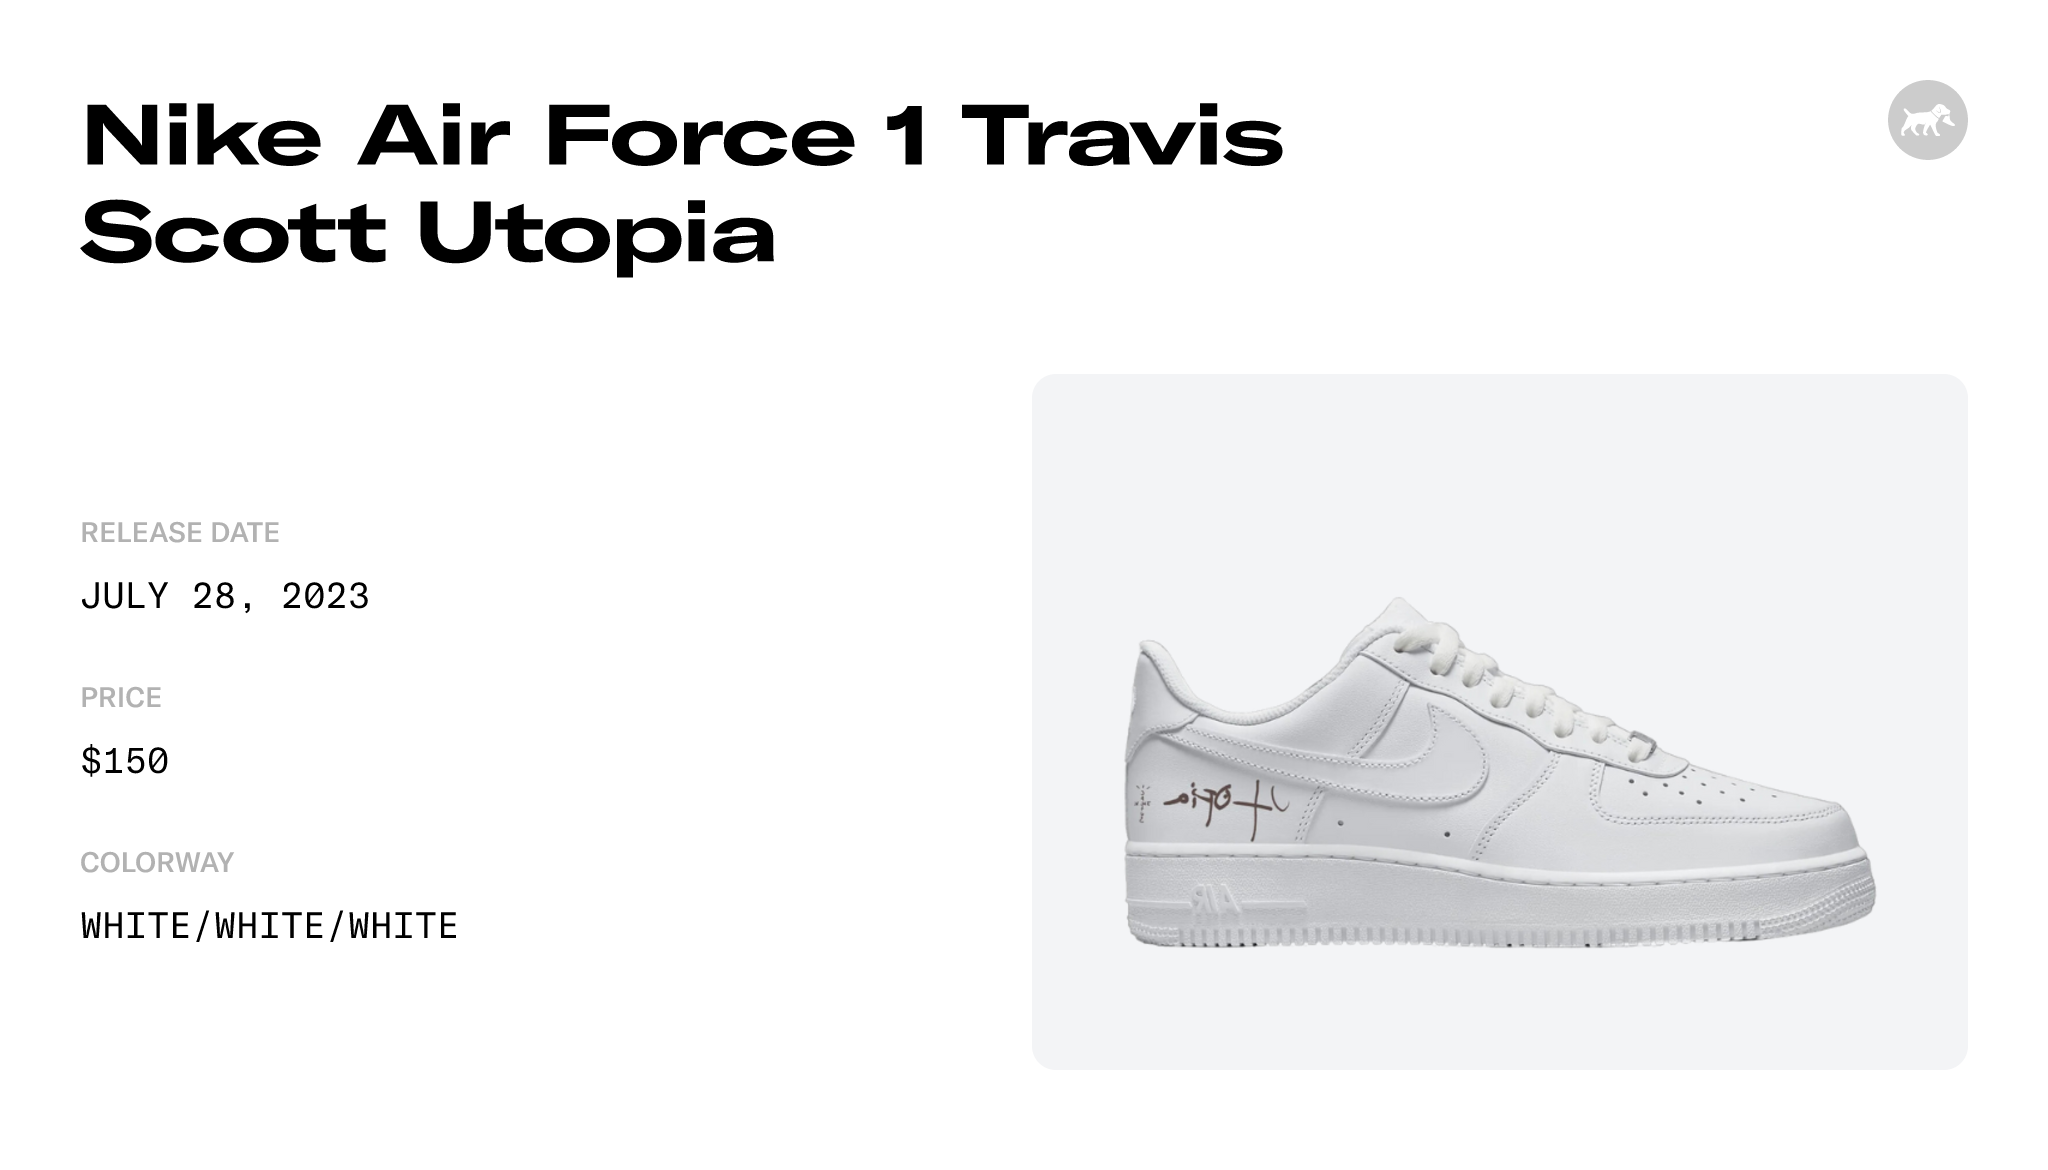 Nike Air Force 1 Travis Scott Utopiafalse Raffles and Release Date